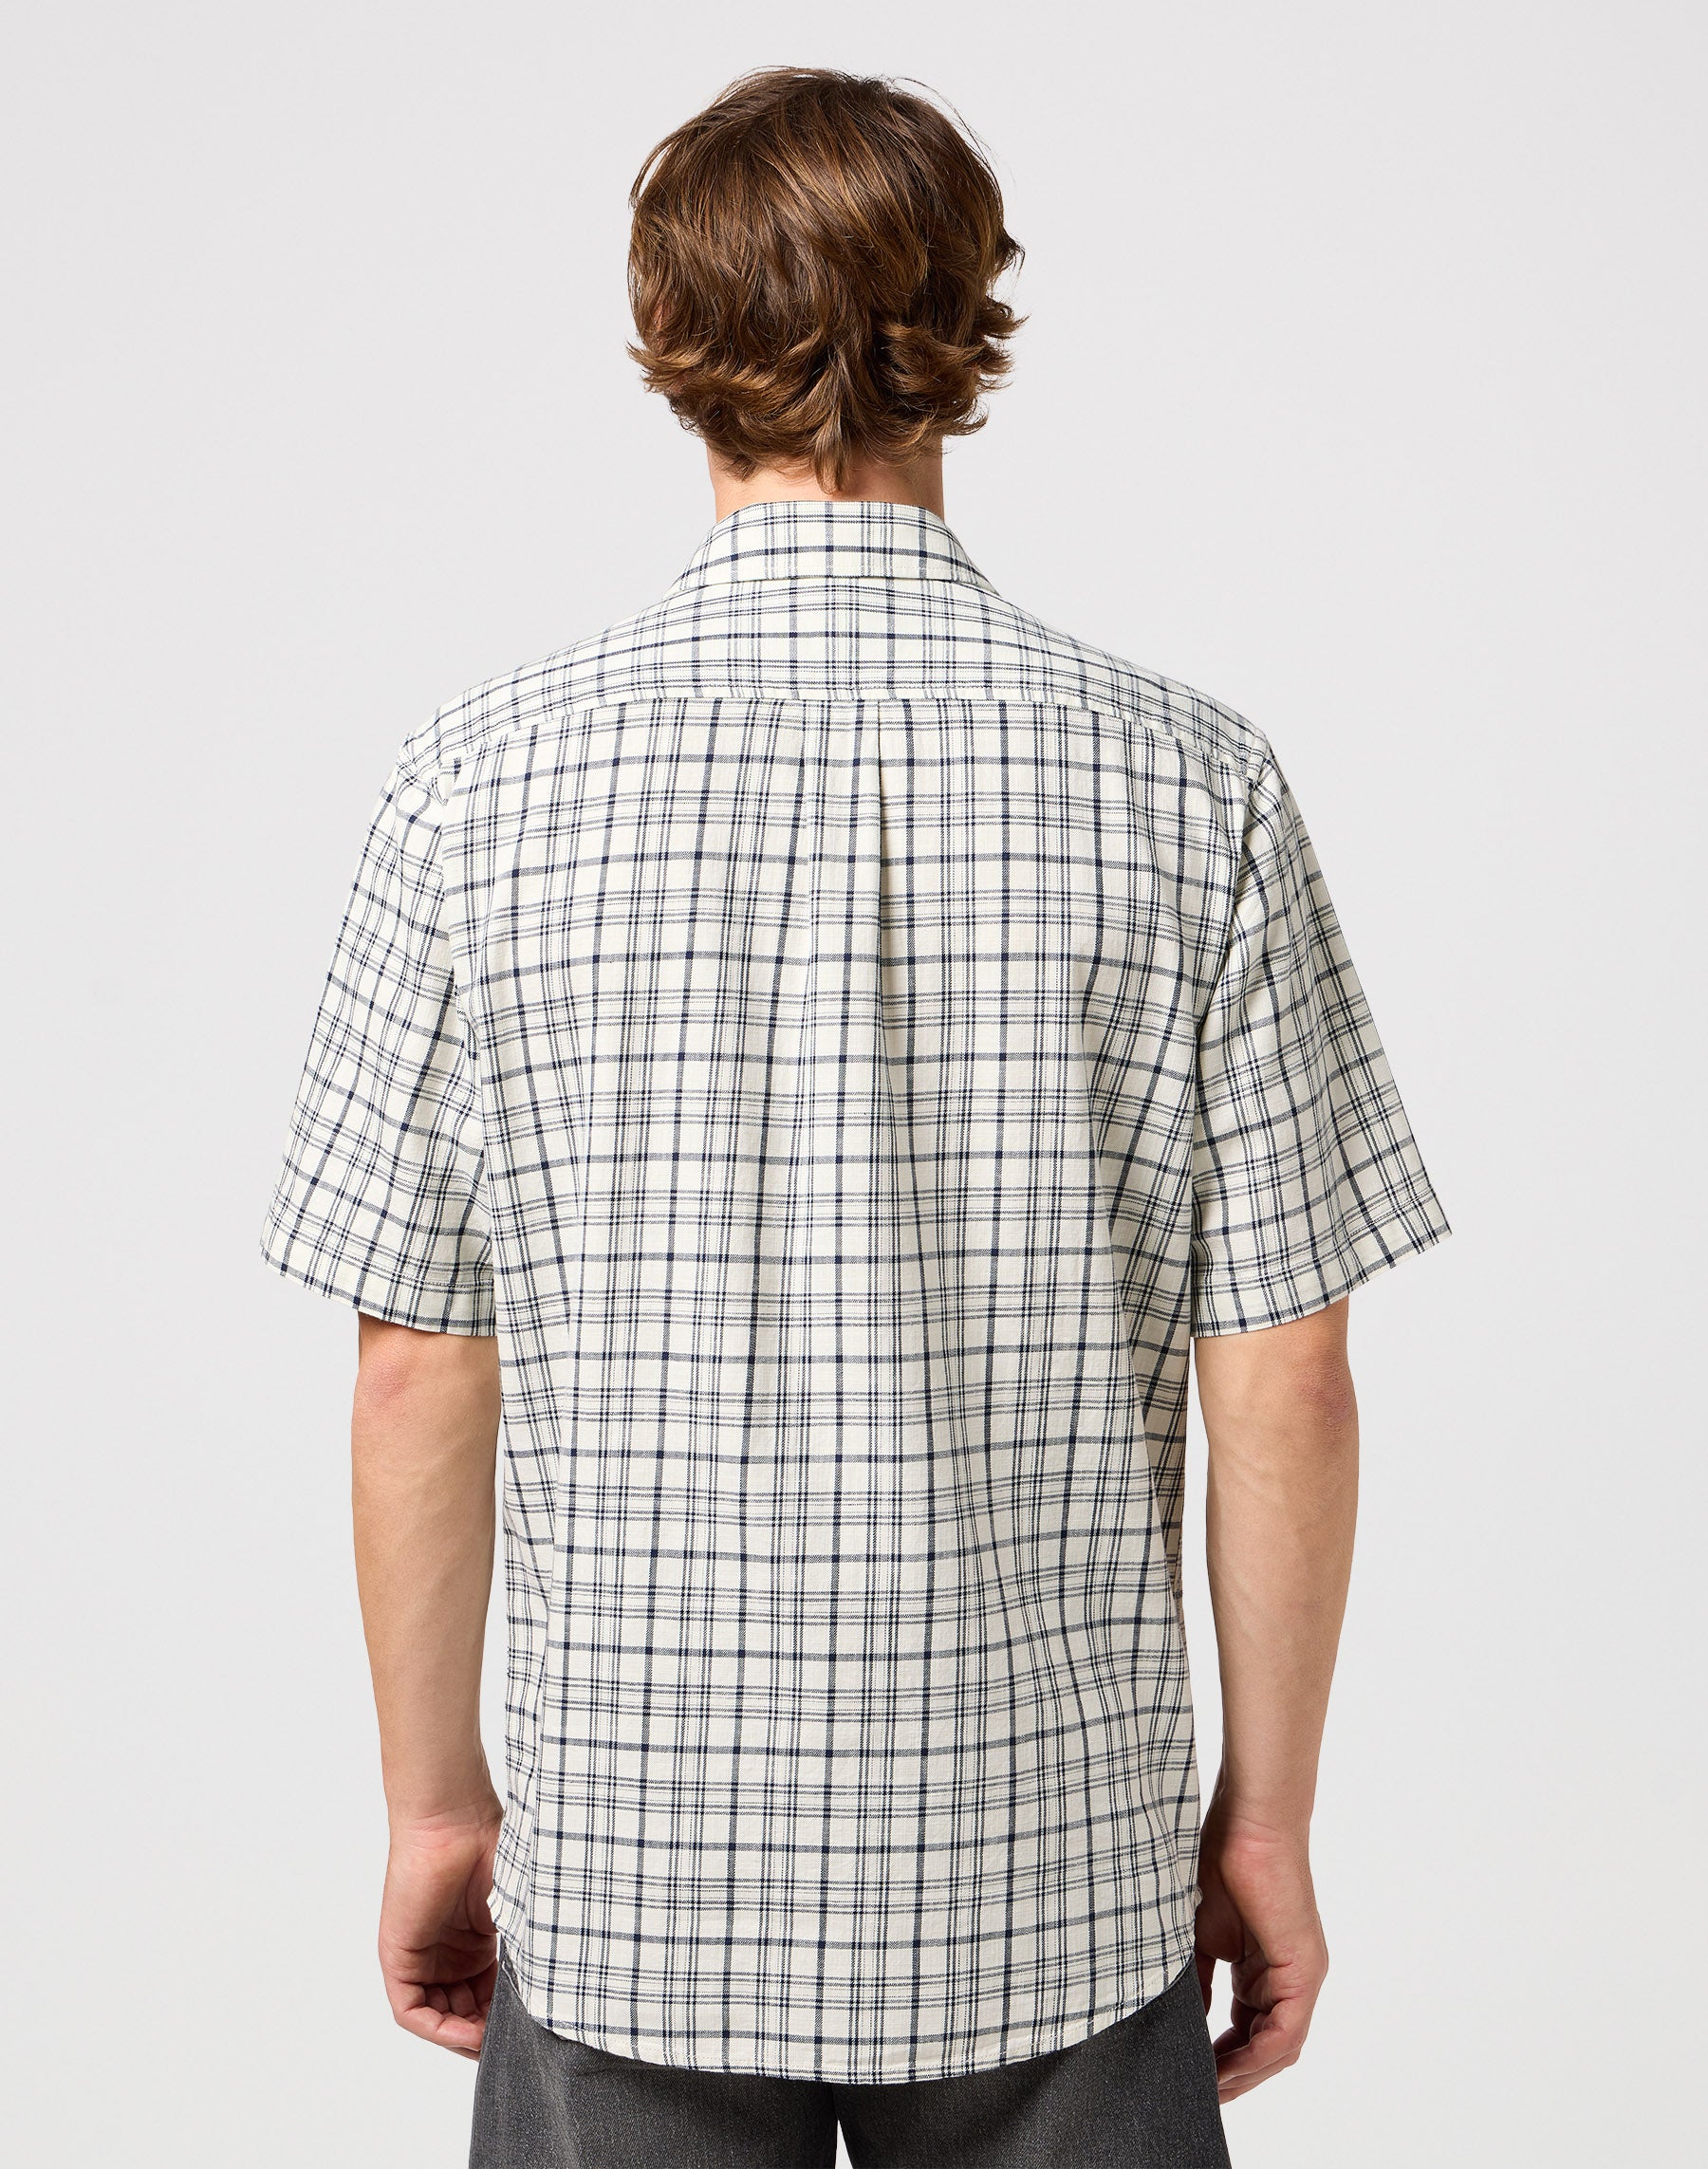 Kurzarm One Pocket Shirt in Pristine Hemden Wrangler   